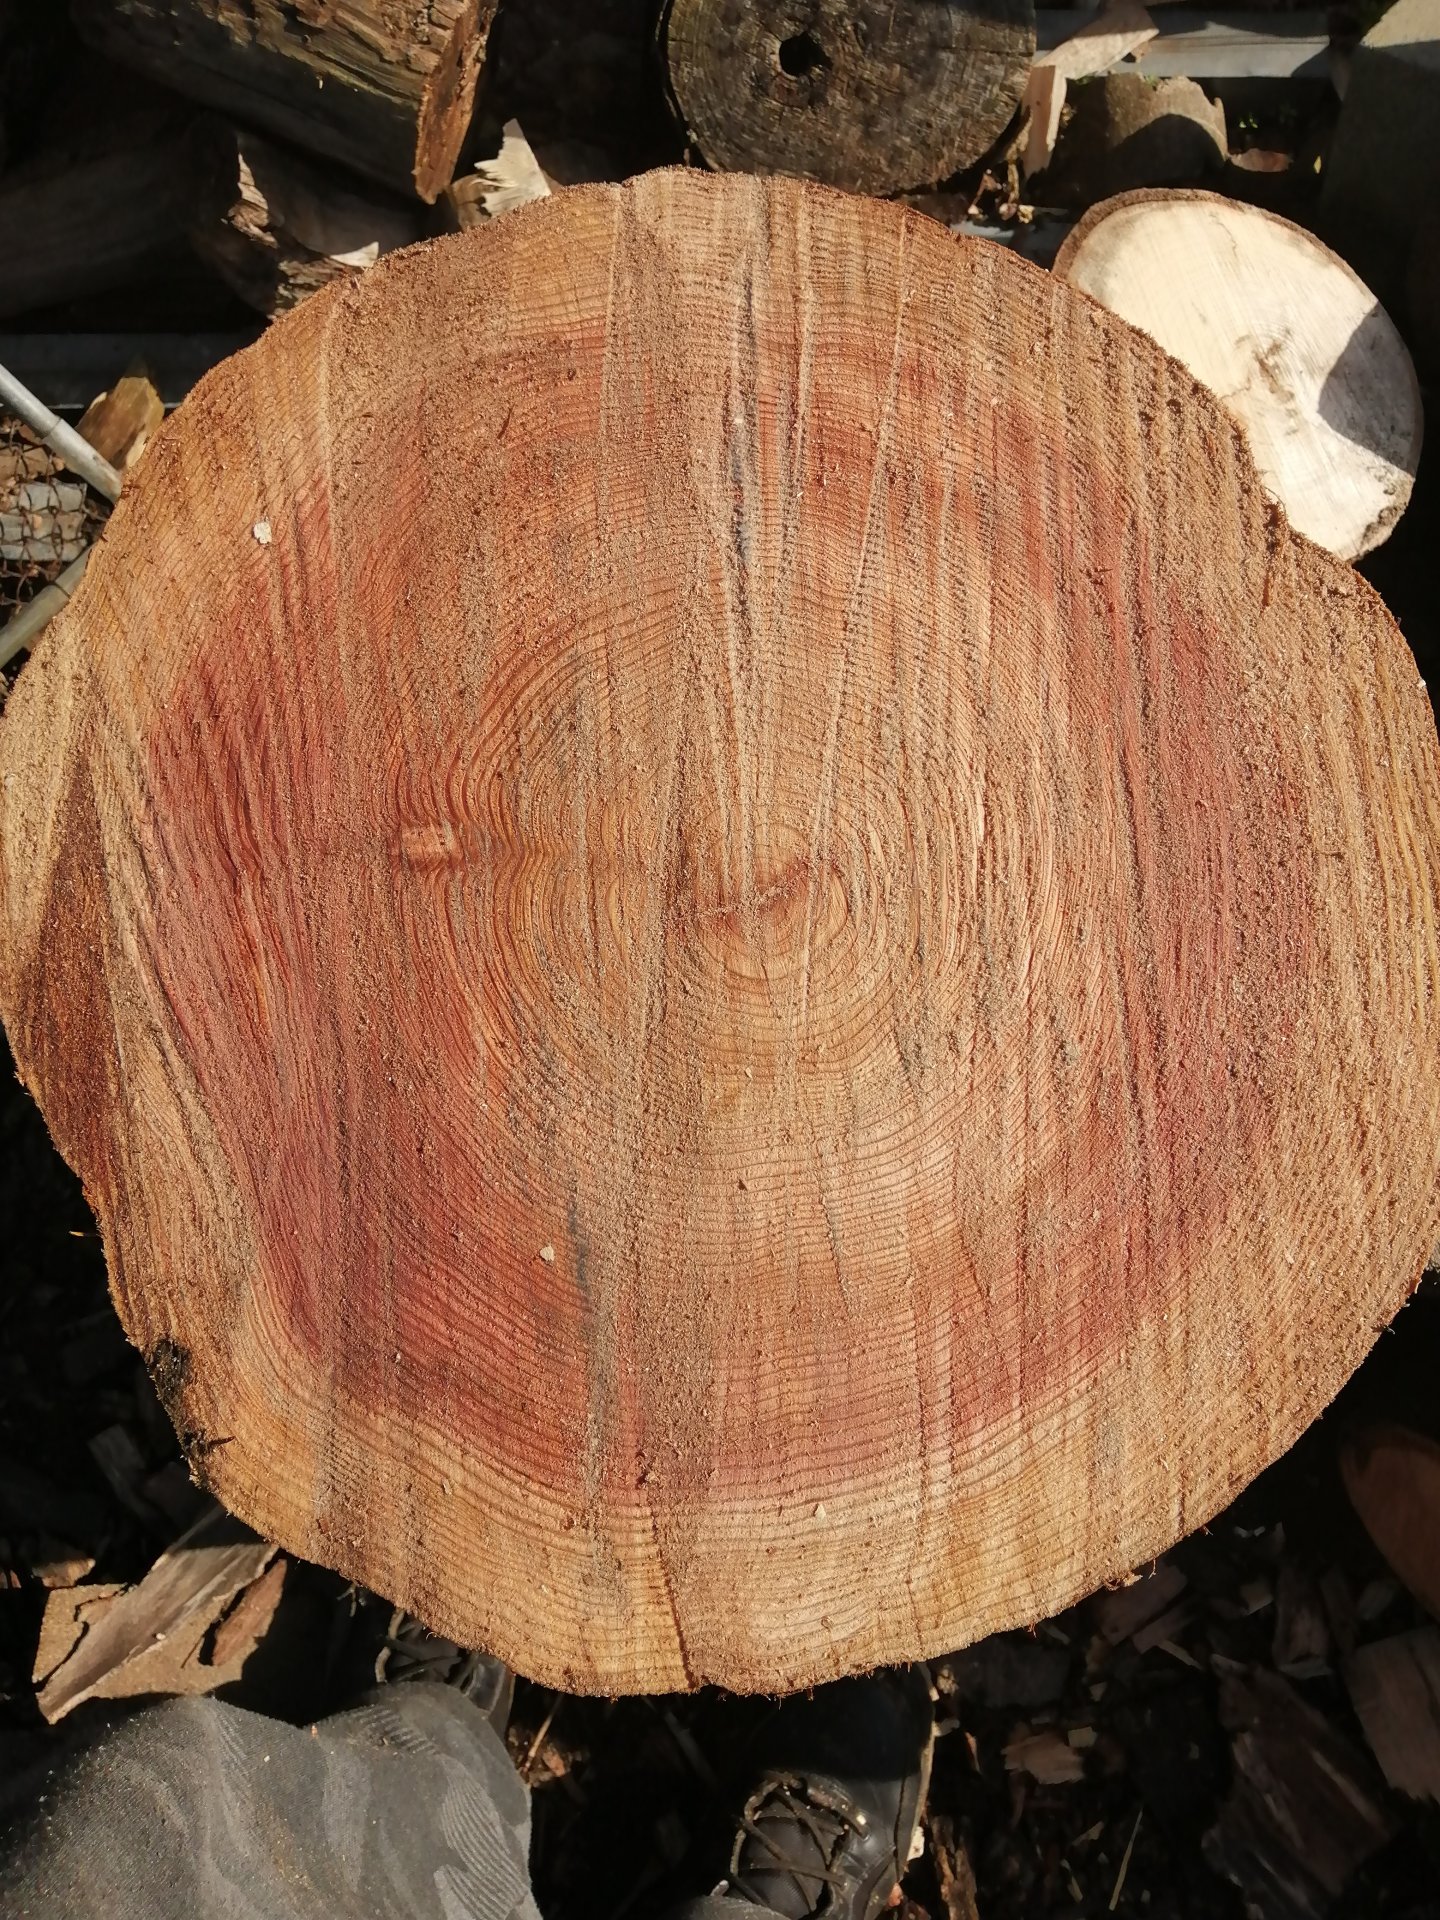 Splitting log top view.